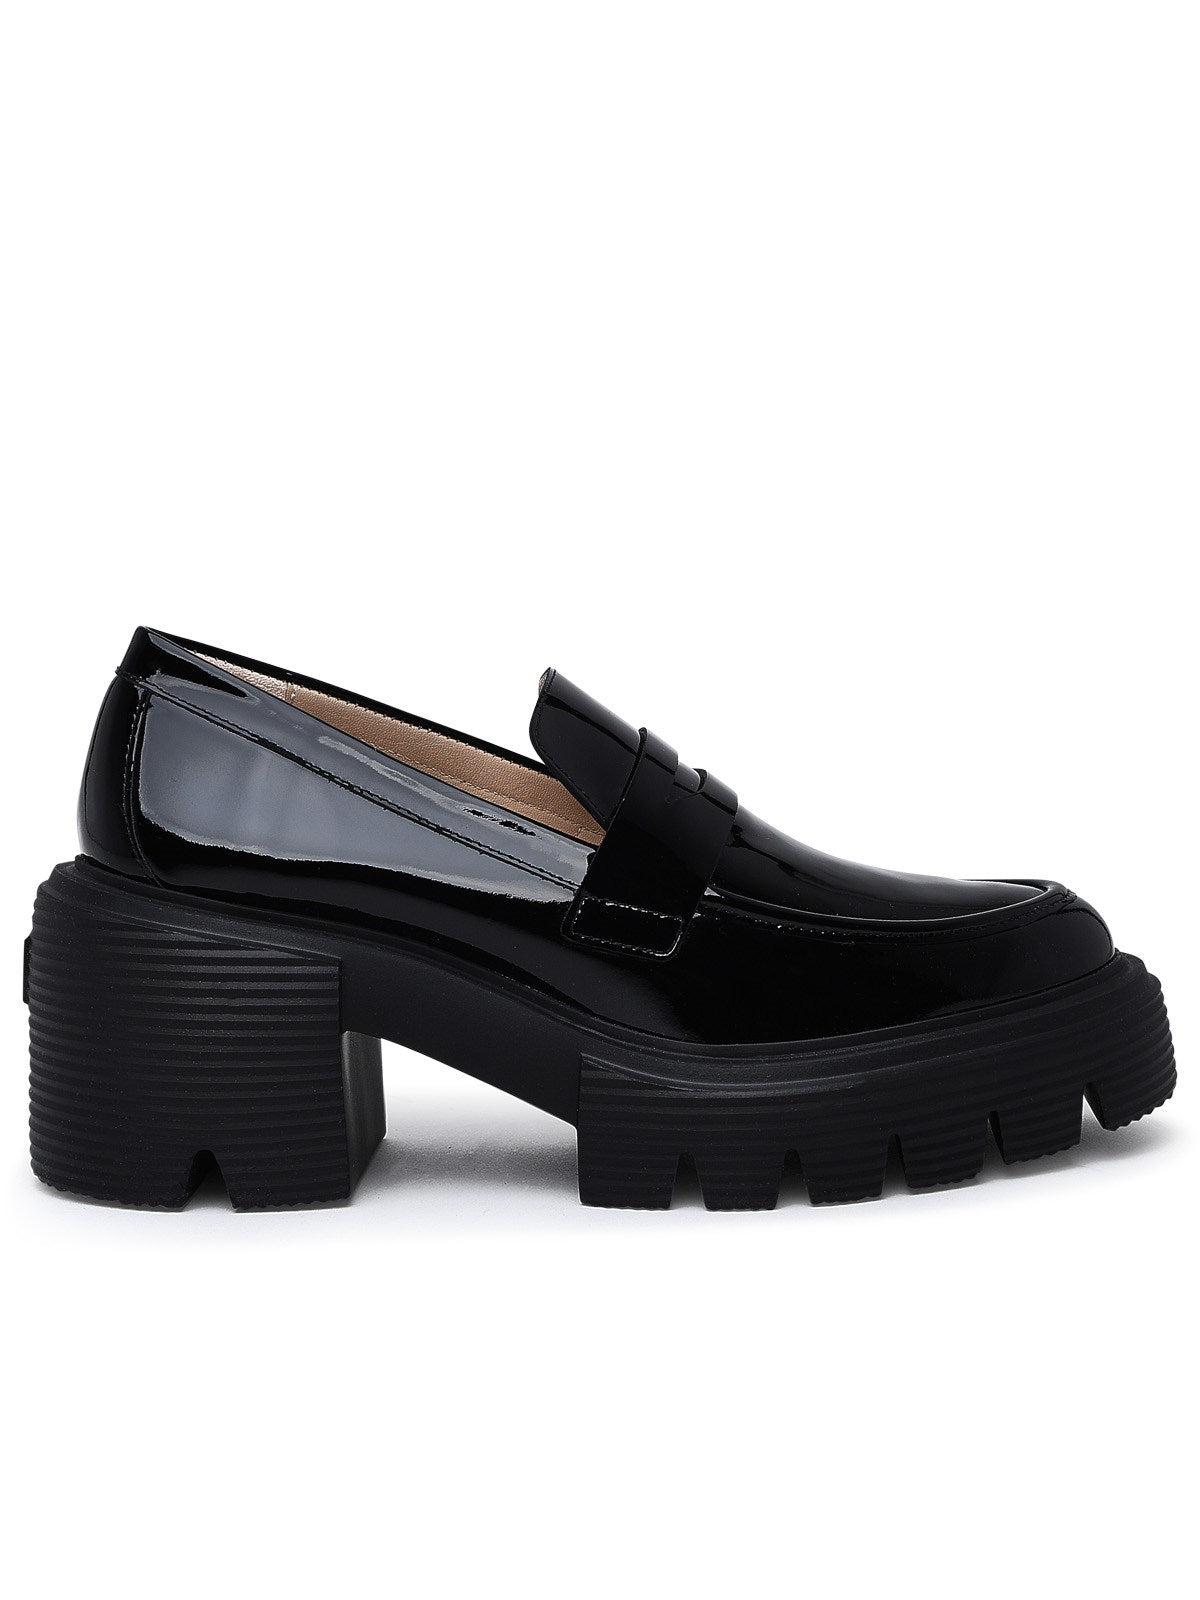 Stuart Weitzman Leather Soho Loafer in Black | Lyst